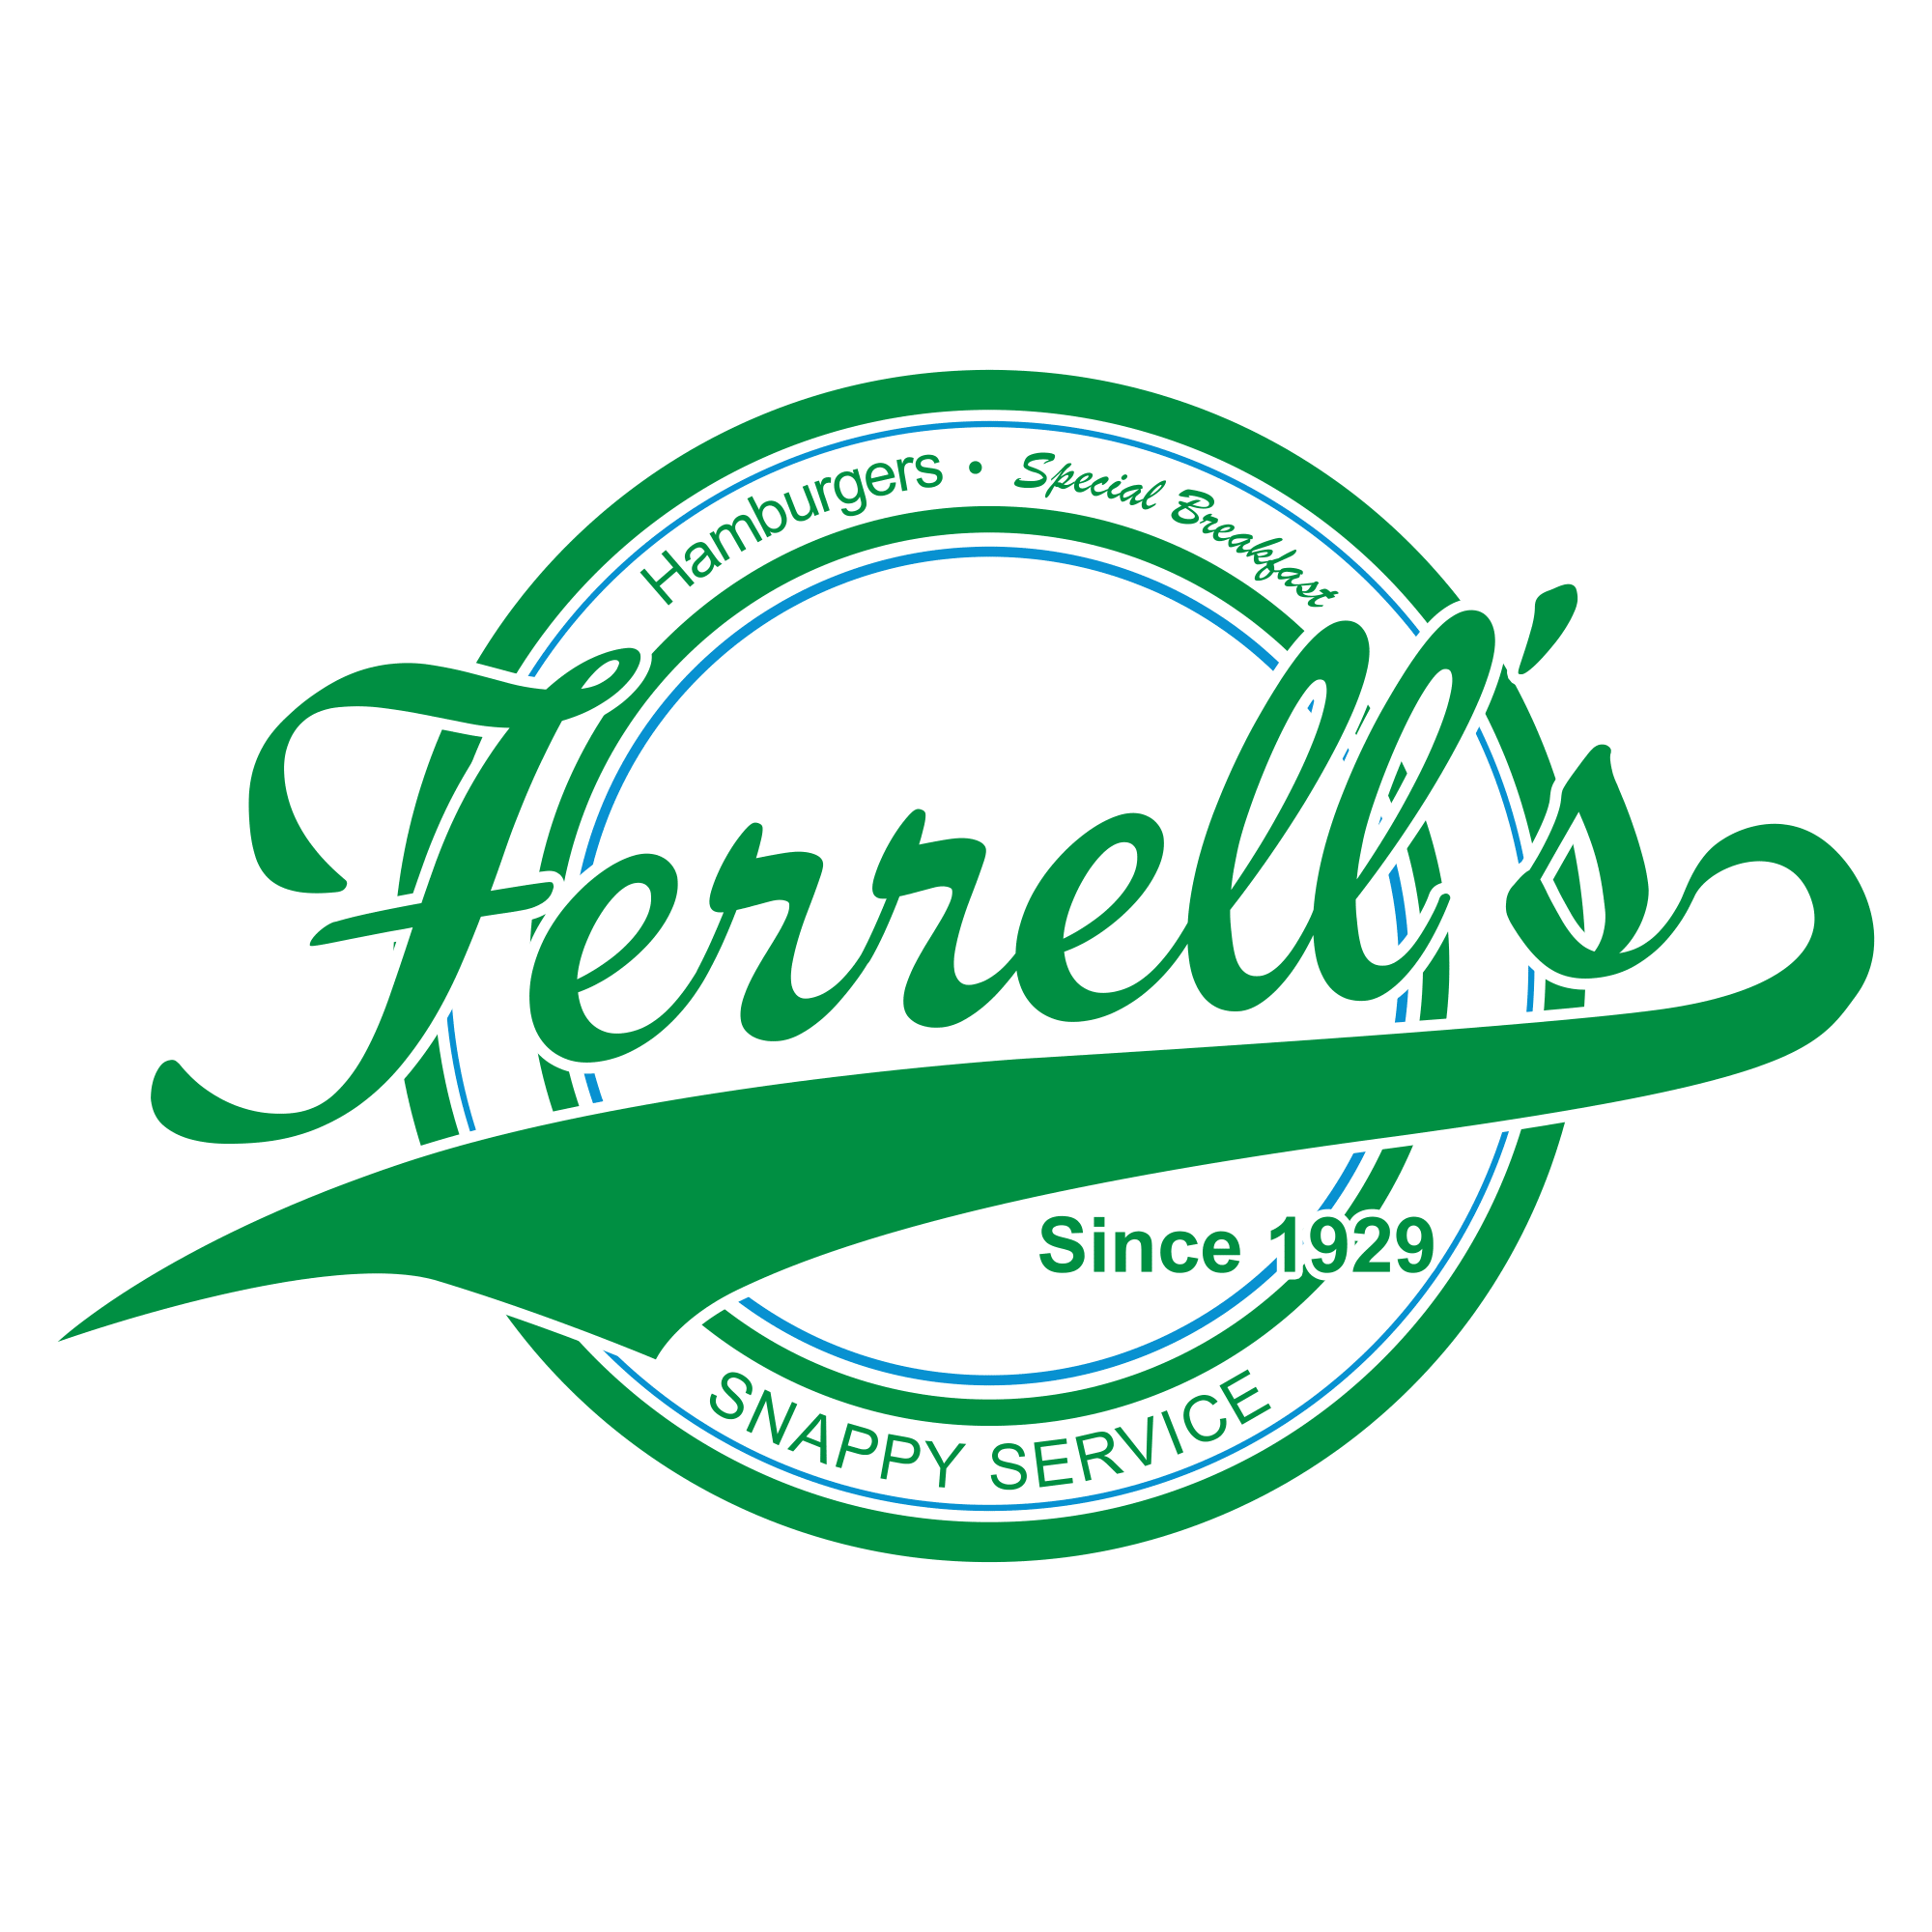 Ferrell's Snappy Service